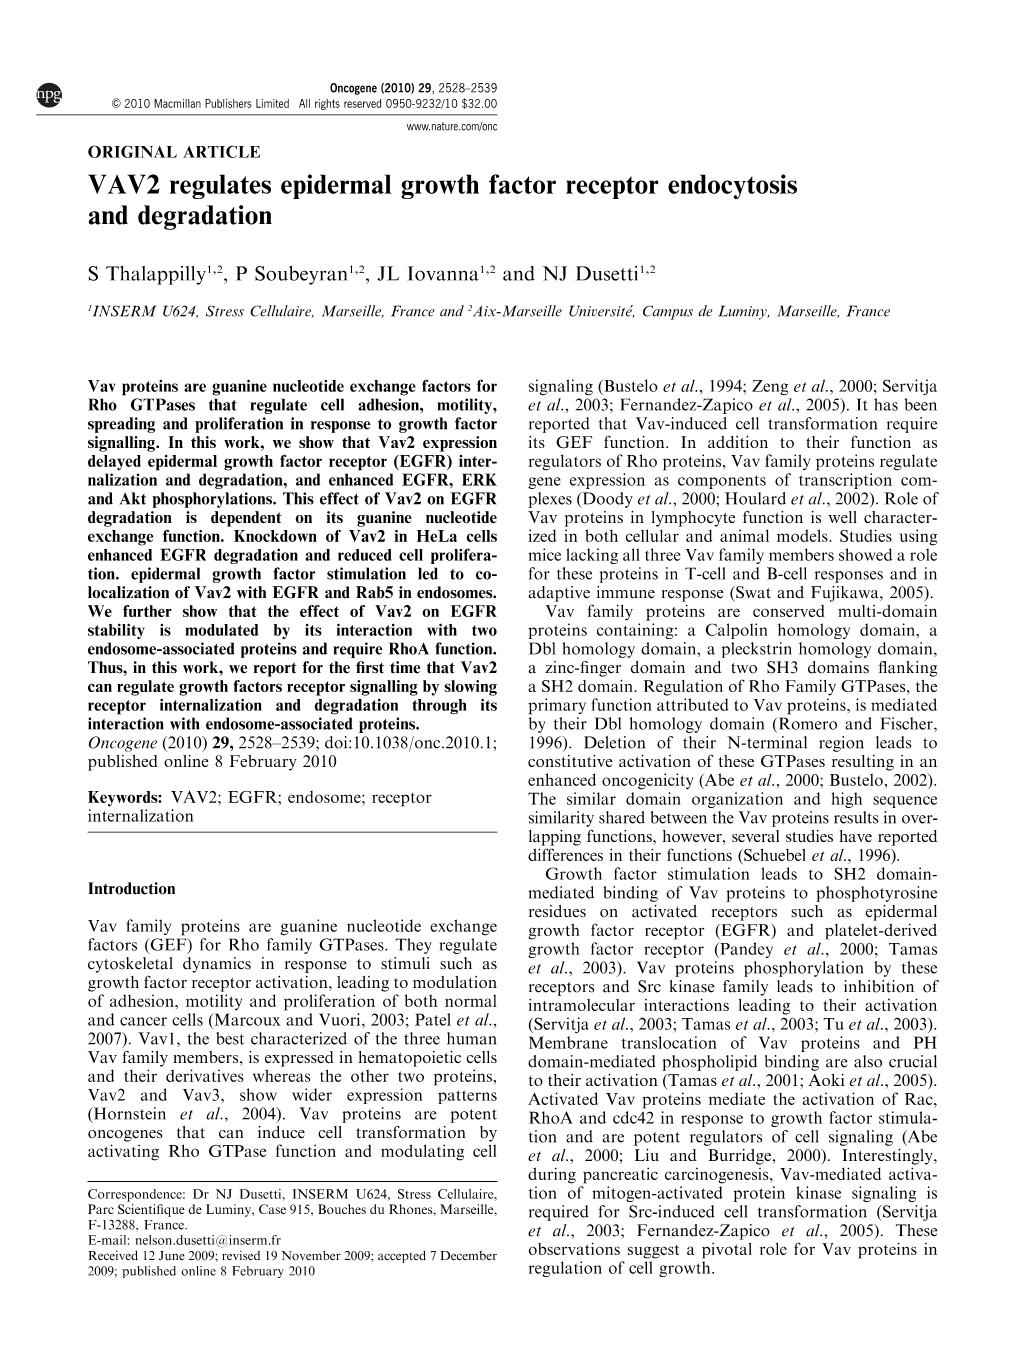 VAV2 Regulates Epidermal Growth Factor Receptor Endocytosis and Degradation